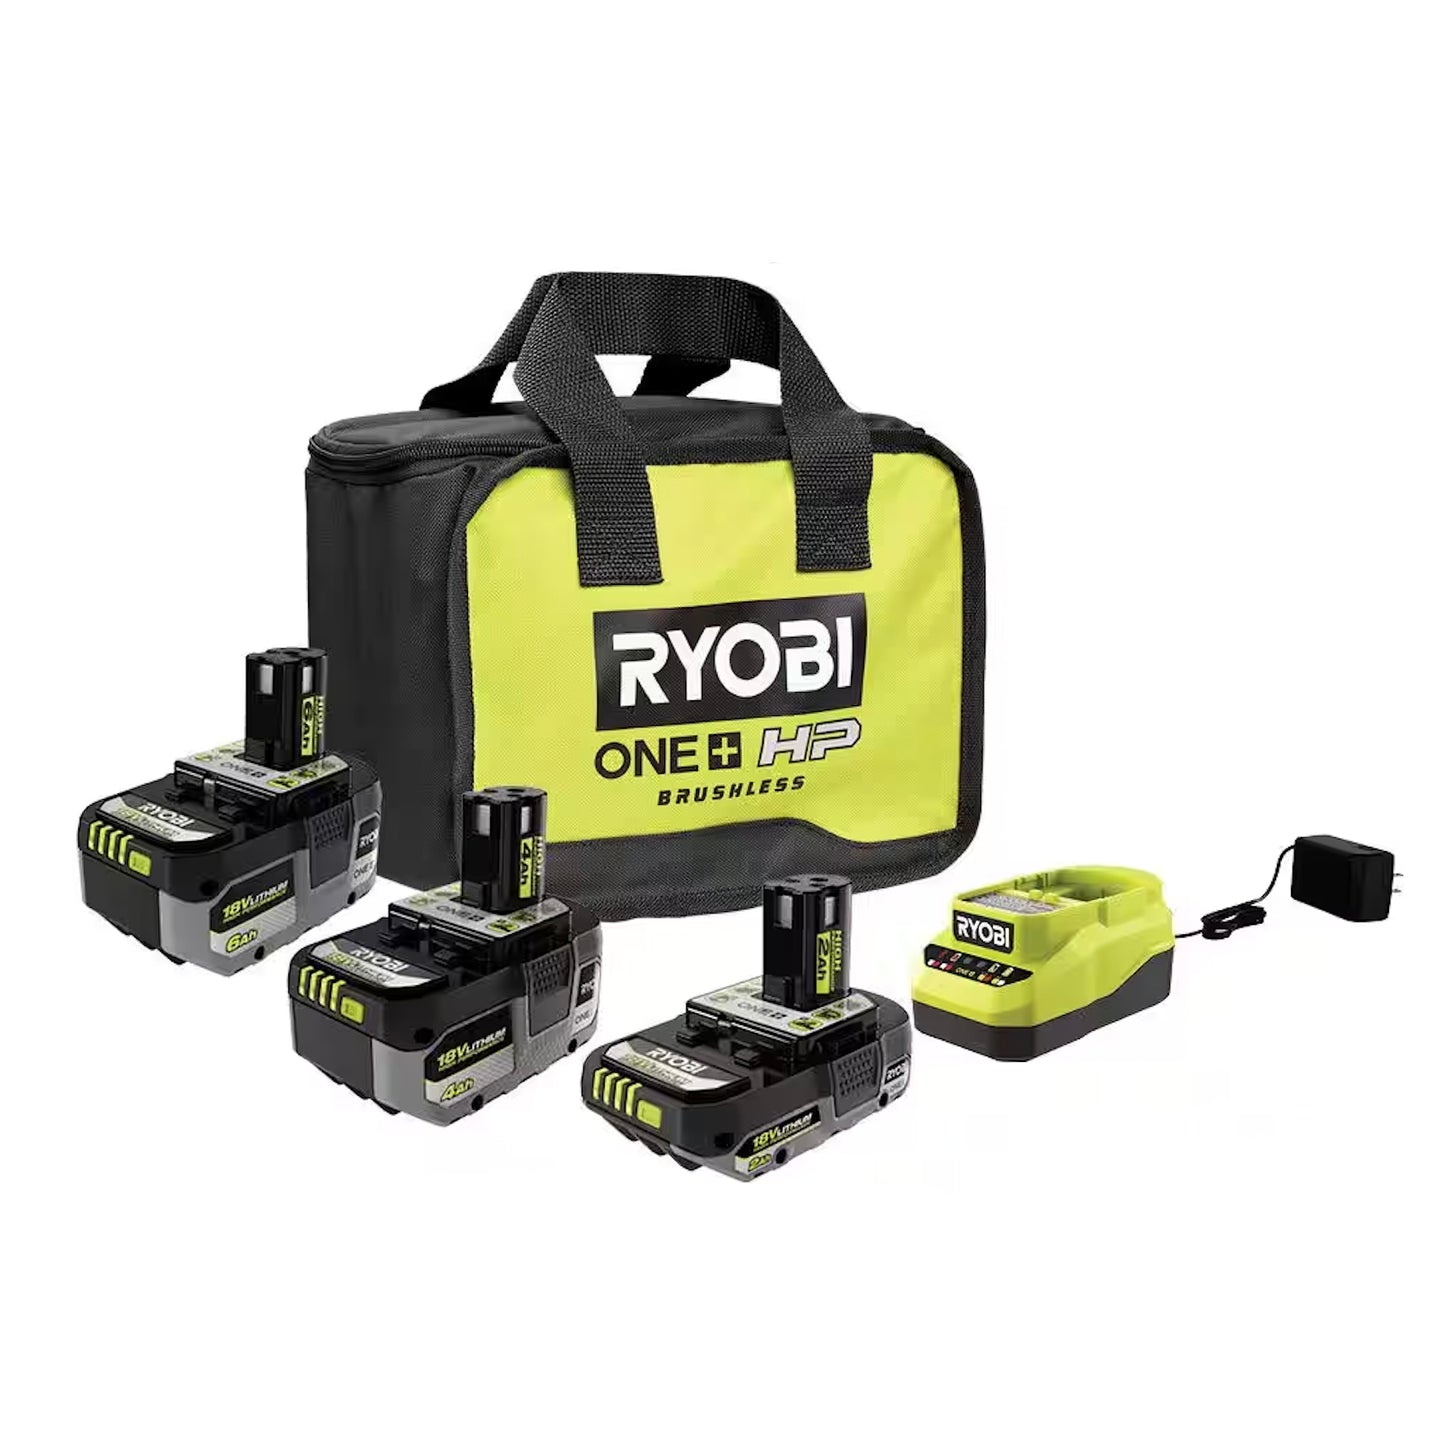 RYOBI ONE+ 18V Lithium-Ion HIGH PERFORMANCE Starter Kit with 2.0 Ah Battery, 4.0 Ah Battery, 6.0 Ah Battery, Charger, and Bag (PSK007)